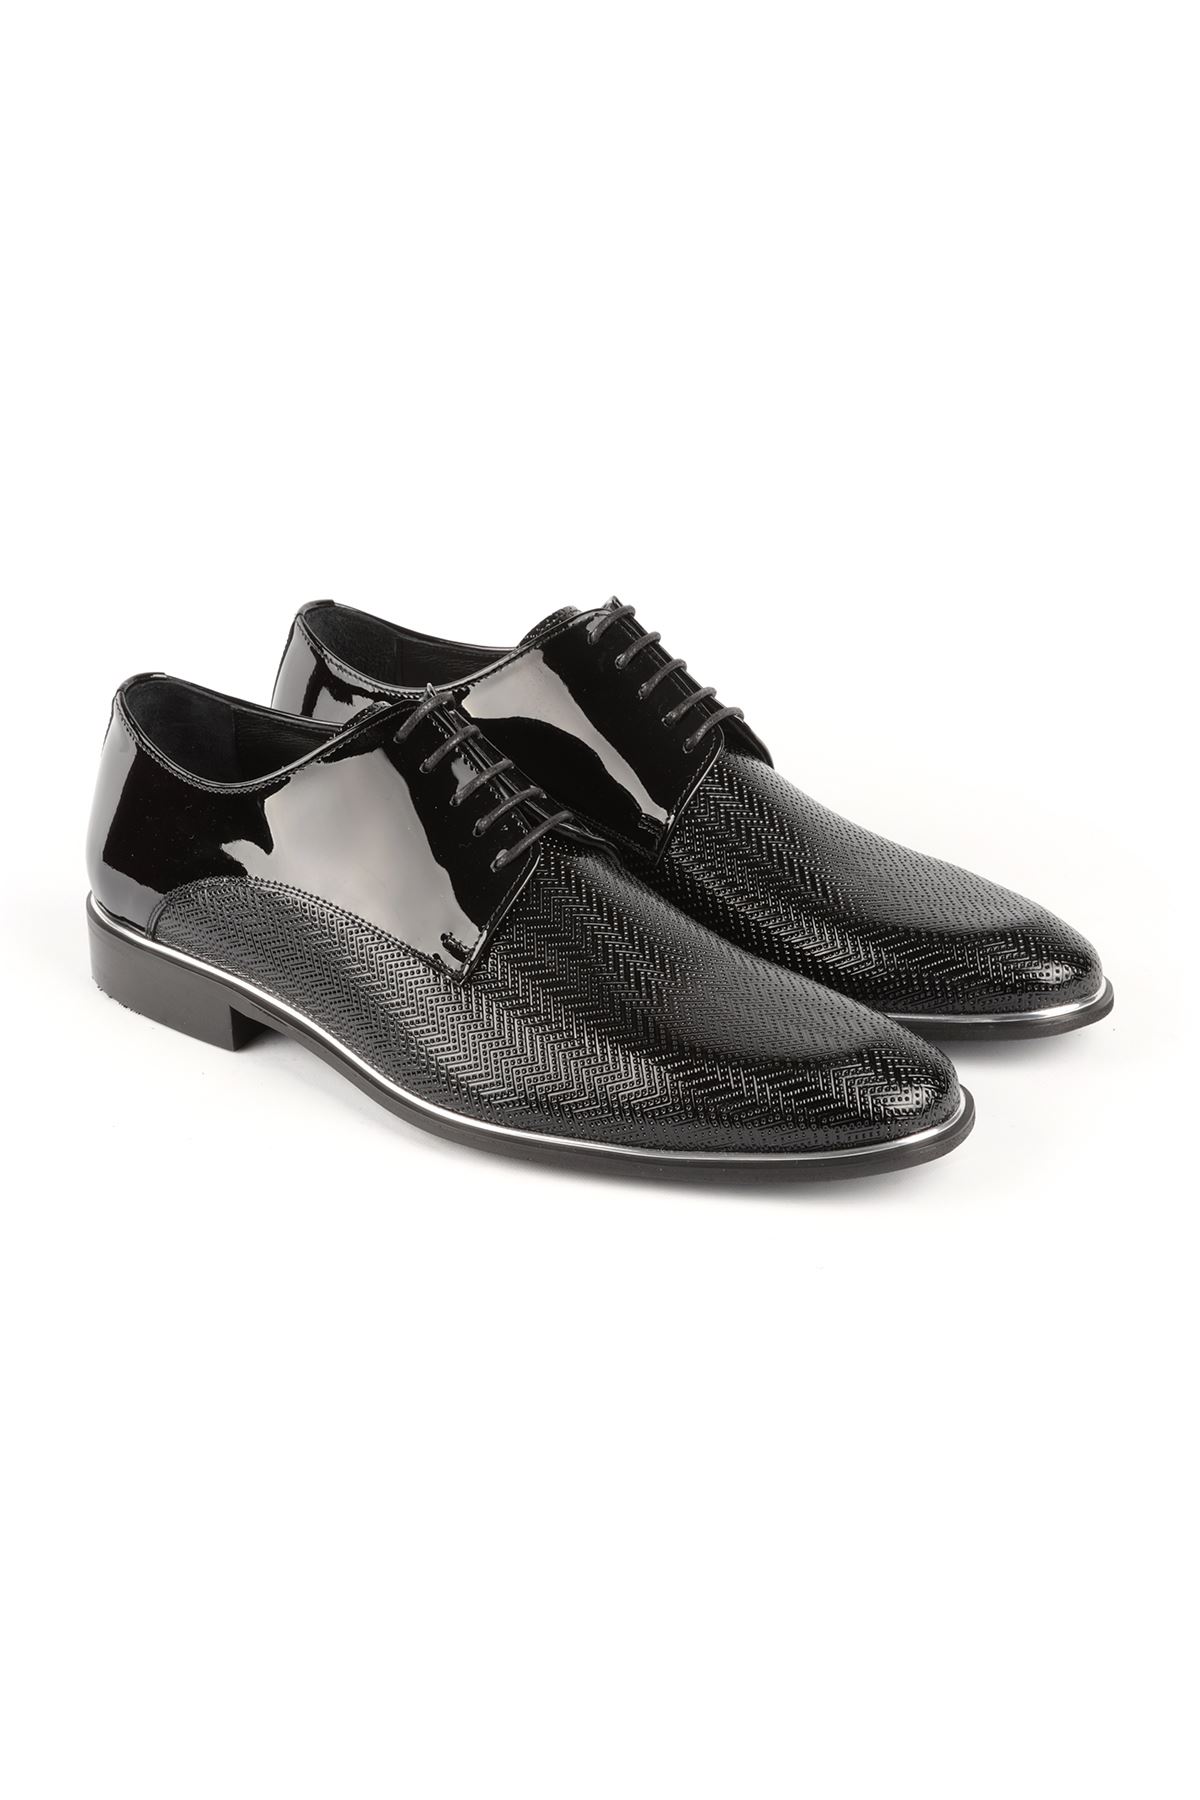 Libero L3580 Siyah Klasik Ayakkabı 